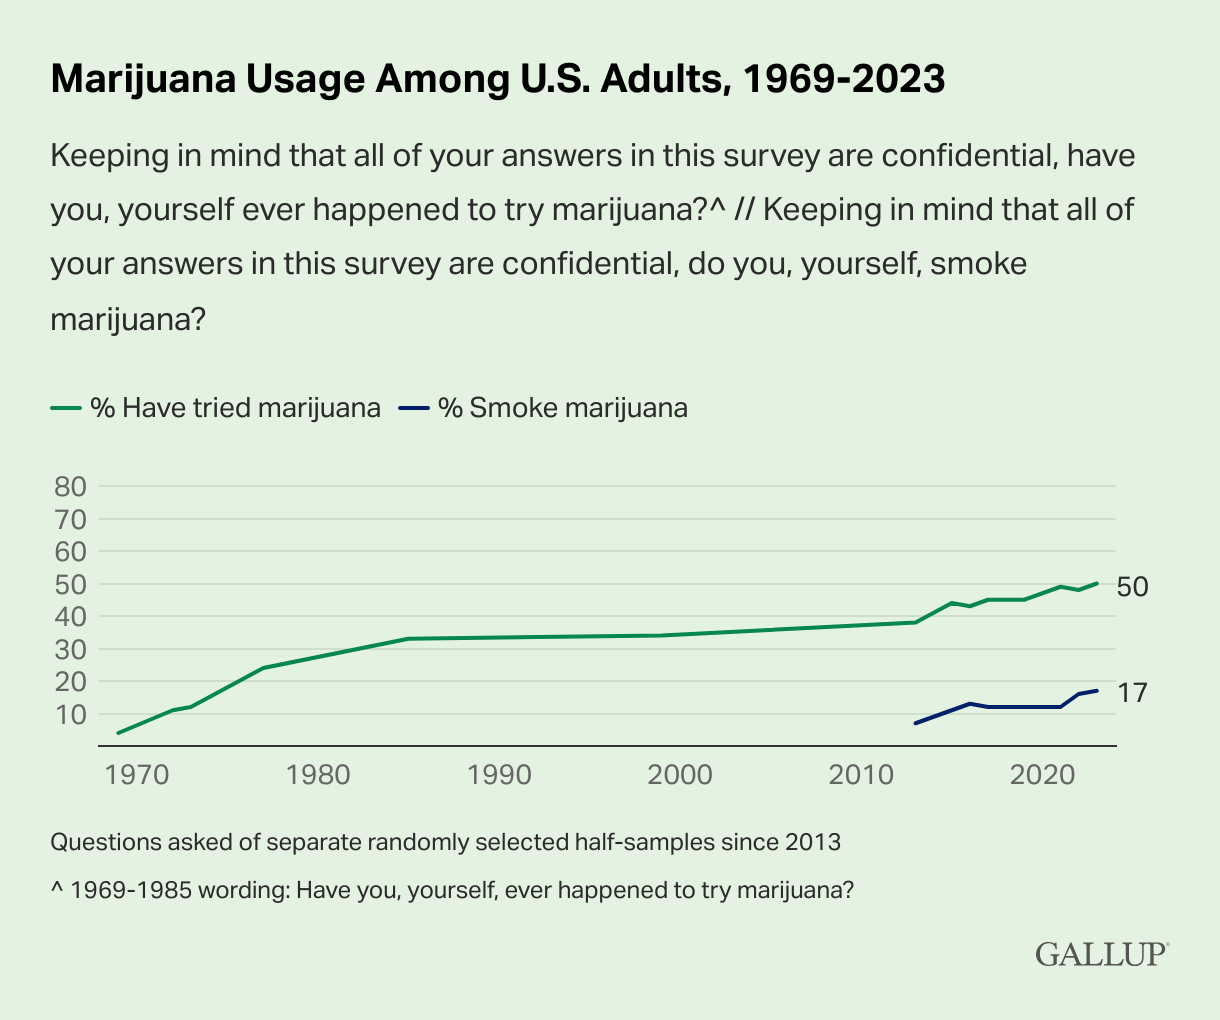 marijuana-usage-among-u.s.-adults-1969-2023